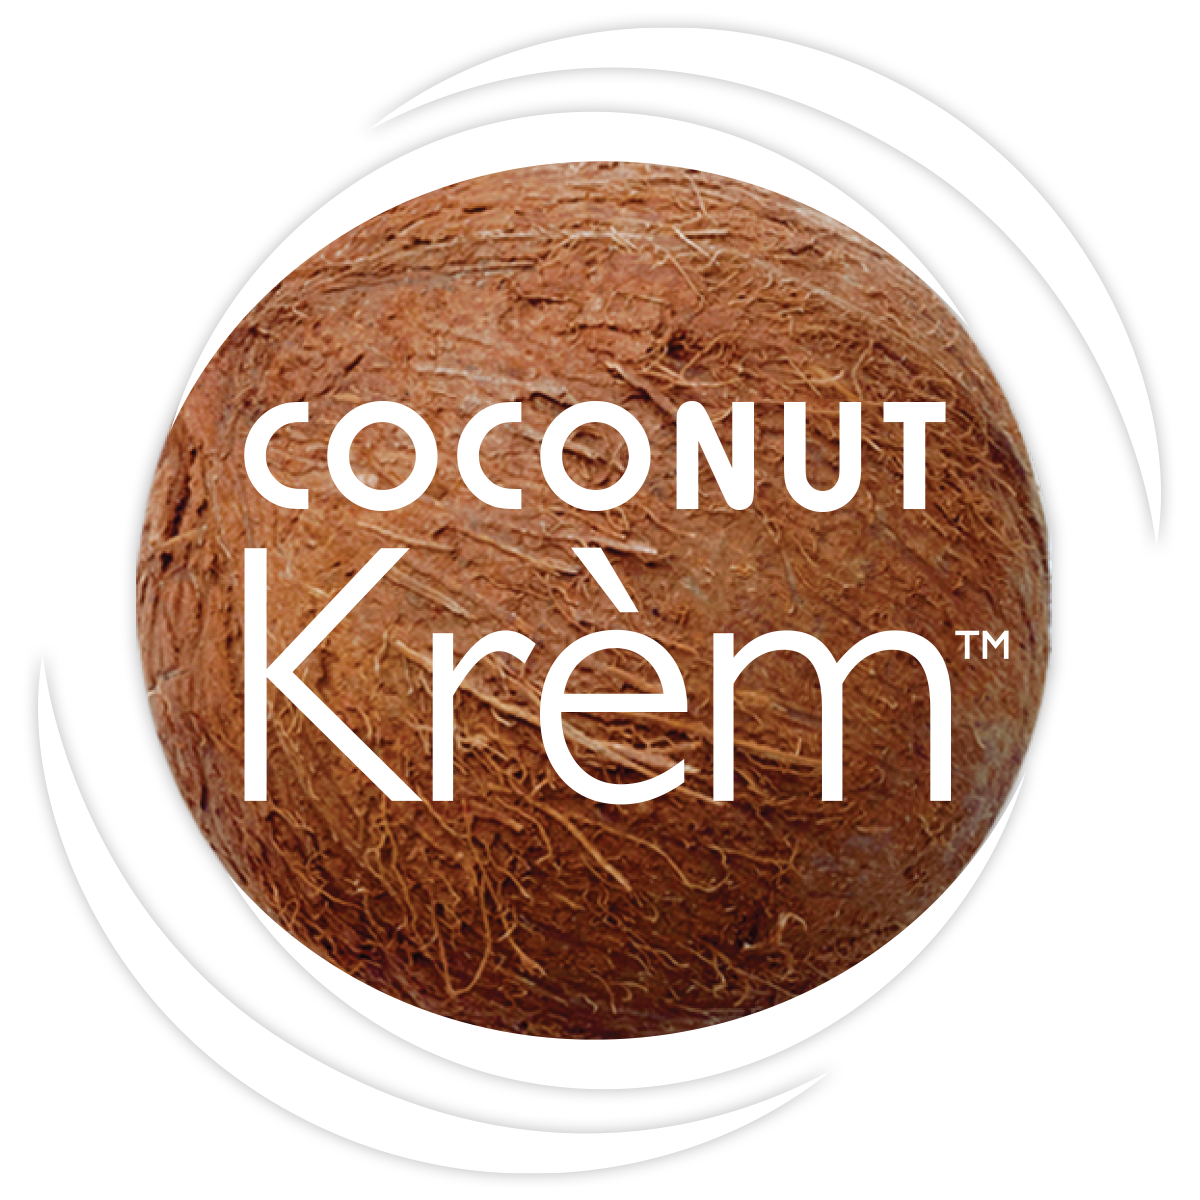 Coconut Krem Body Wash